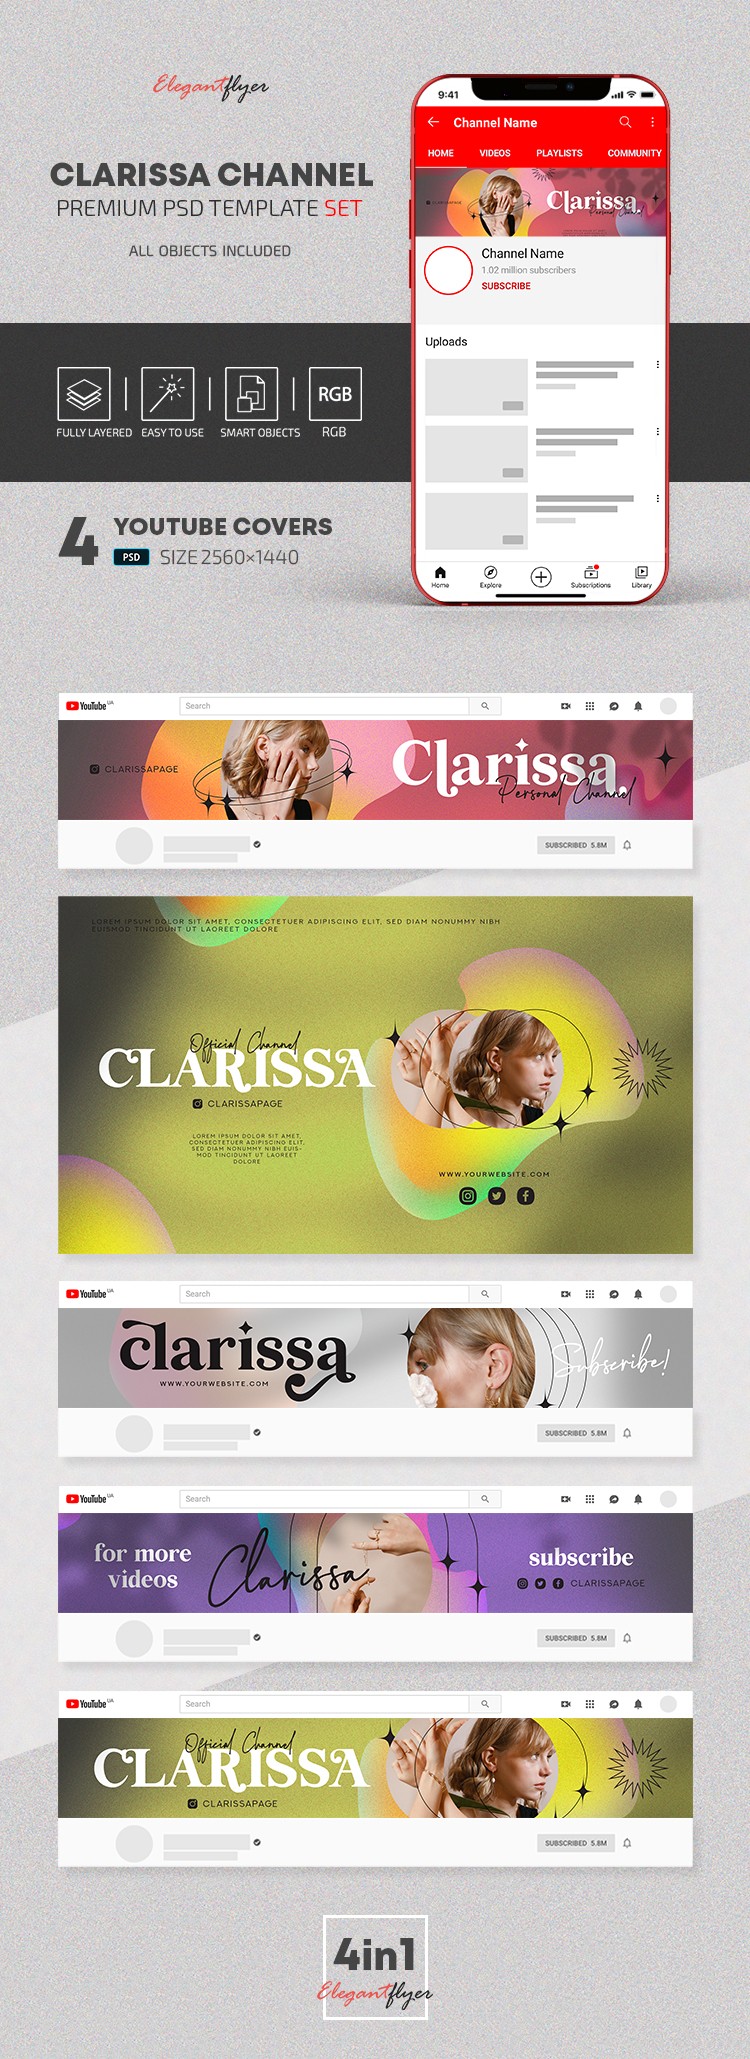 Kanał Clarissa na YouTube by ElegantFlyer